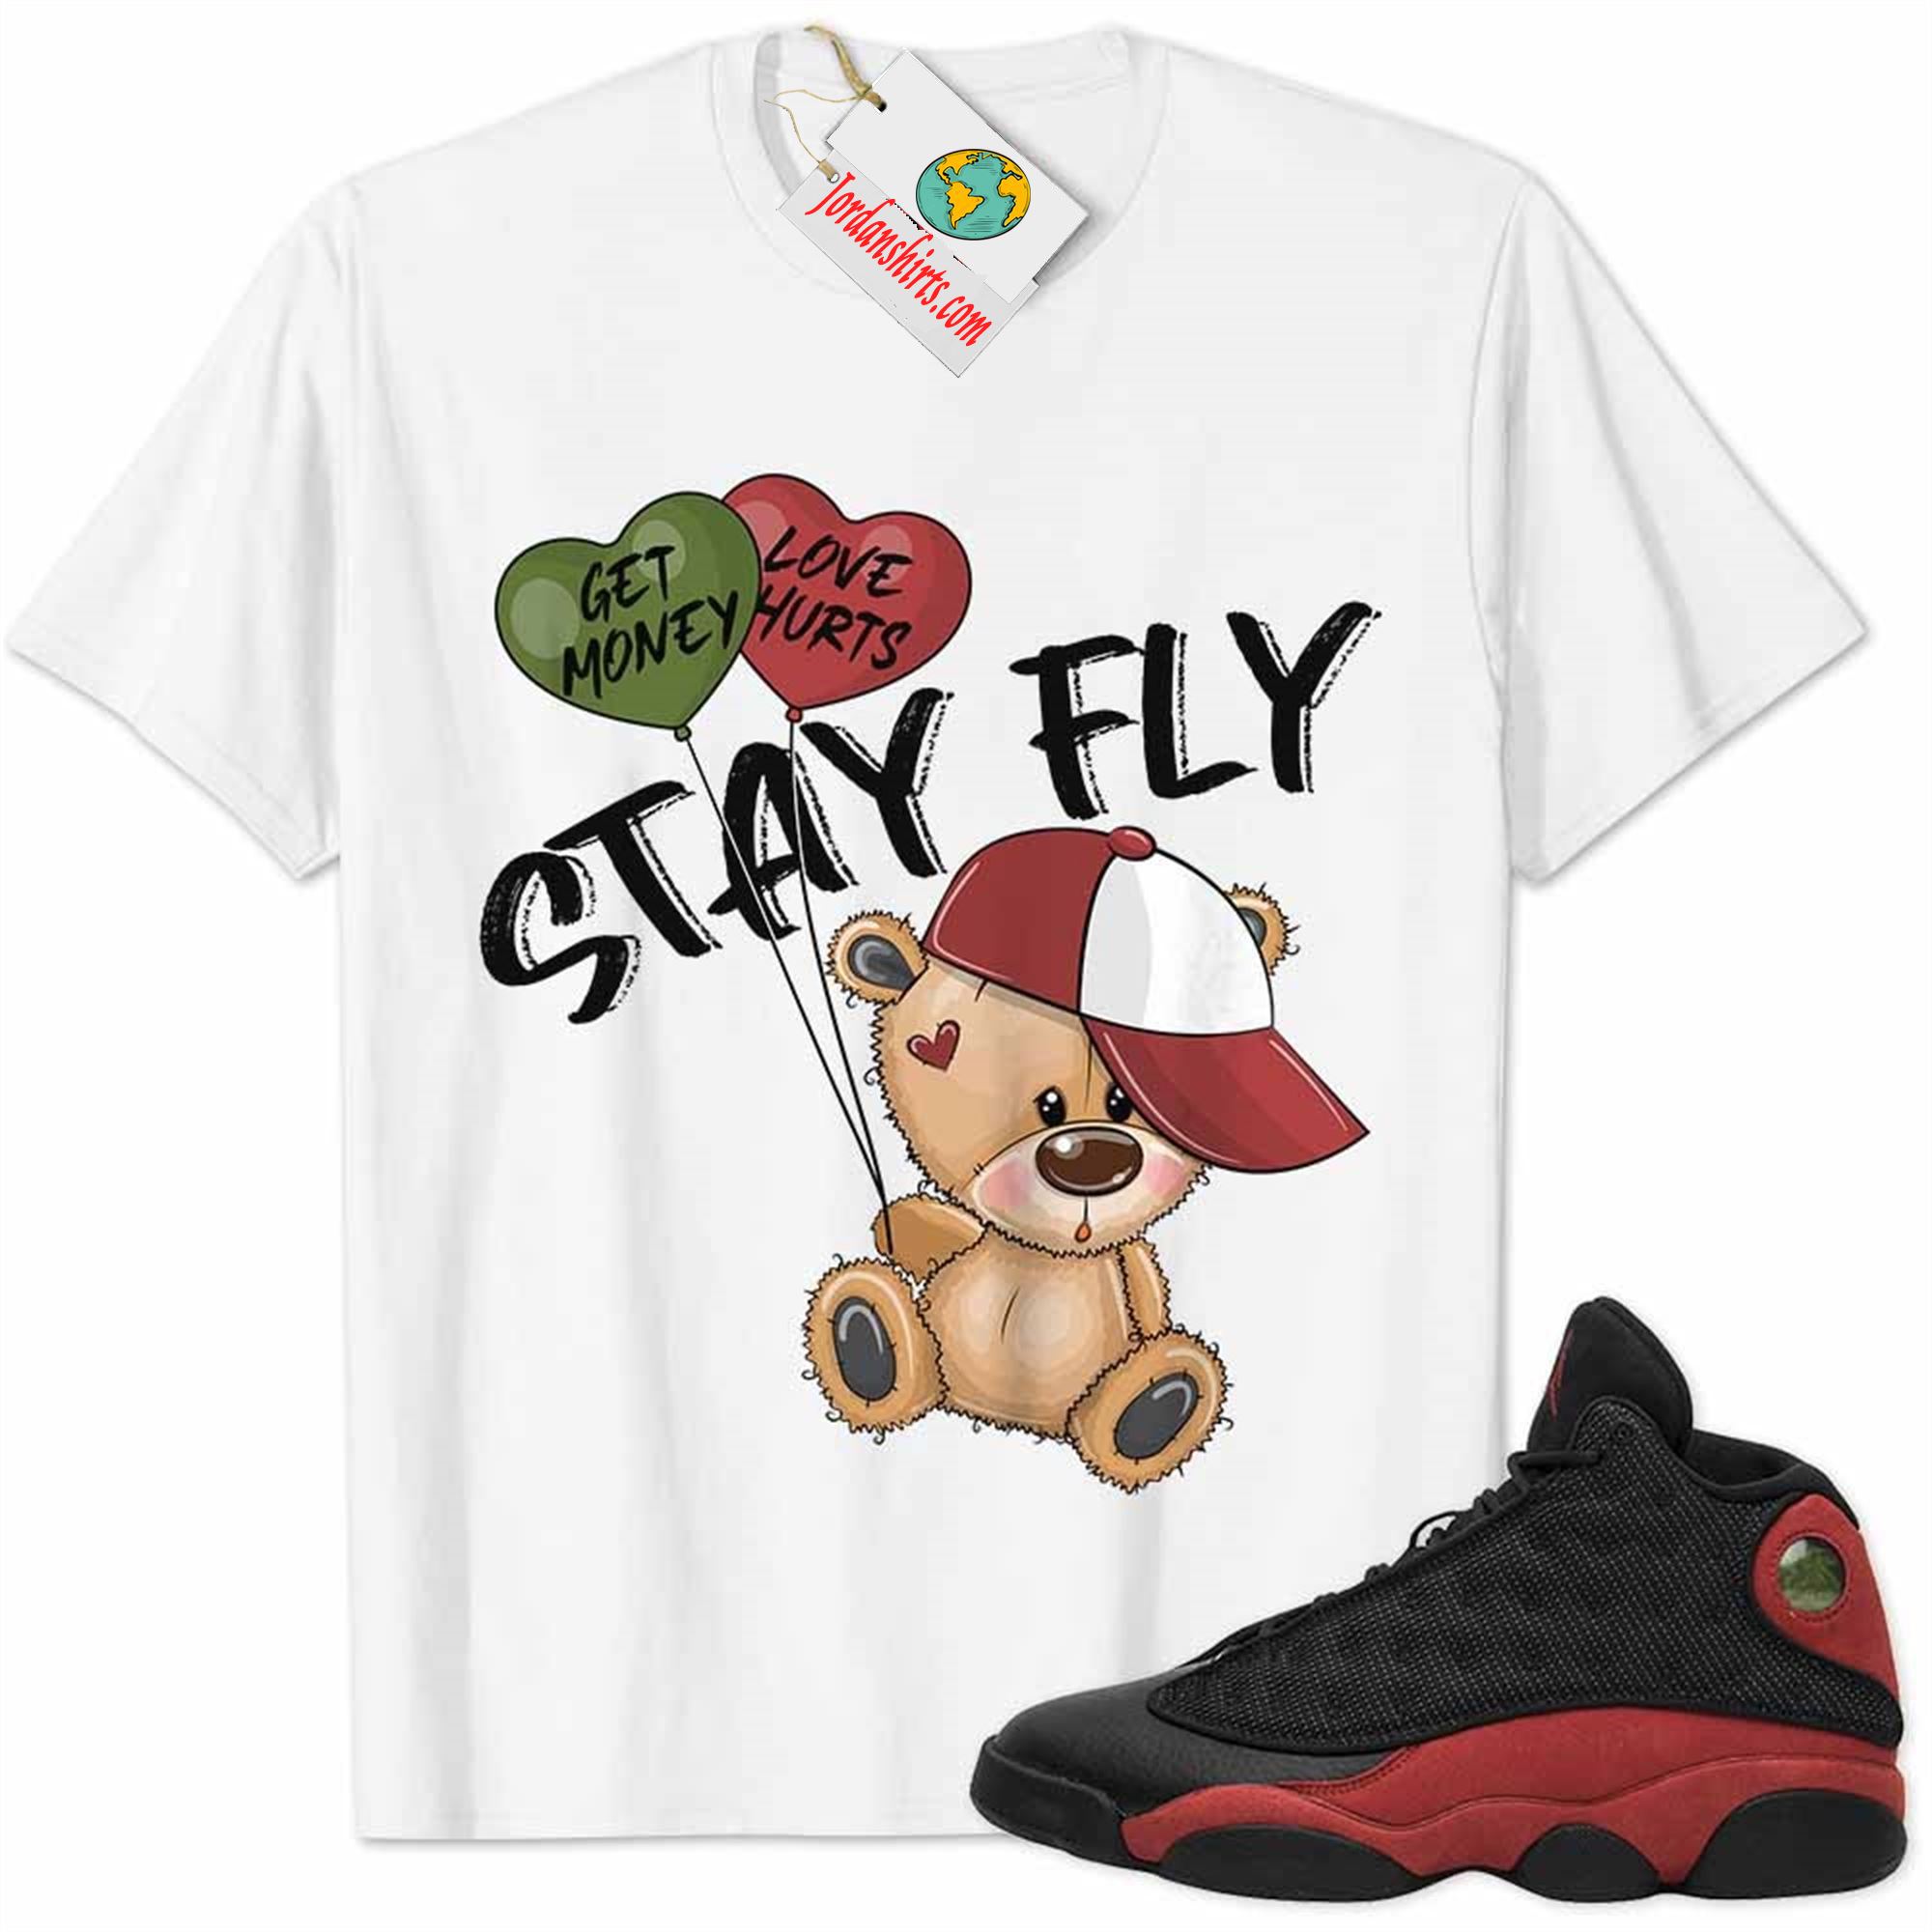 Jordan 13 Shirt, Bred 13s Shirt Cute Teddy Bear Stay Fly Get Money White Plus Size Up To 5xl